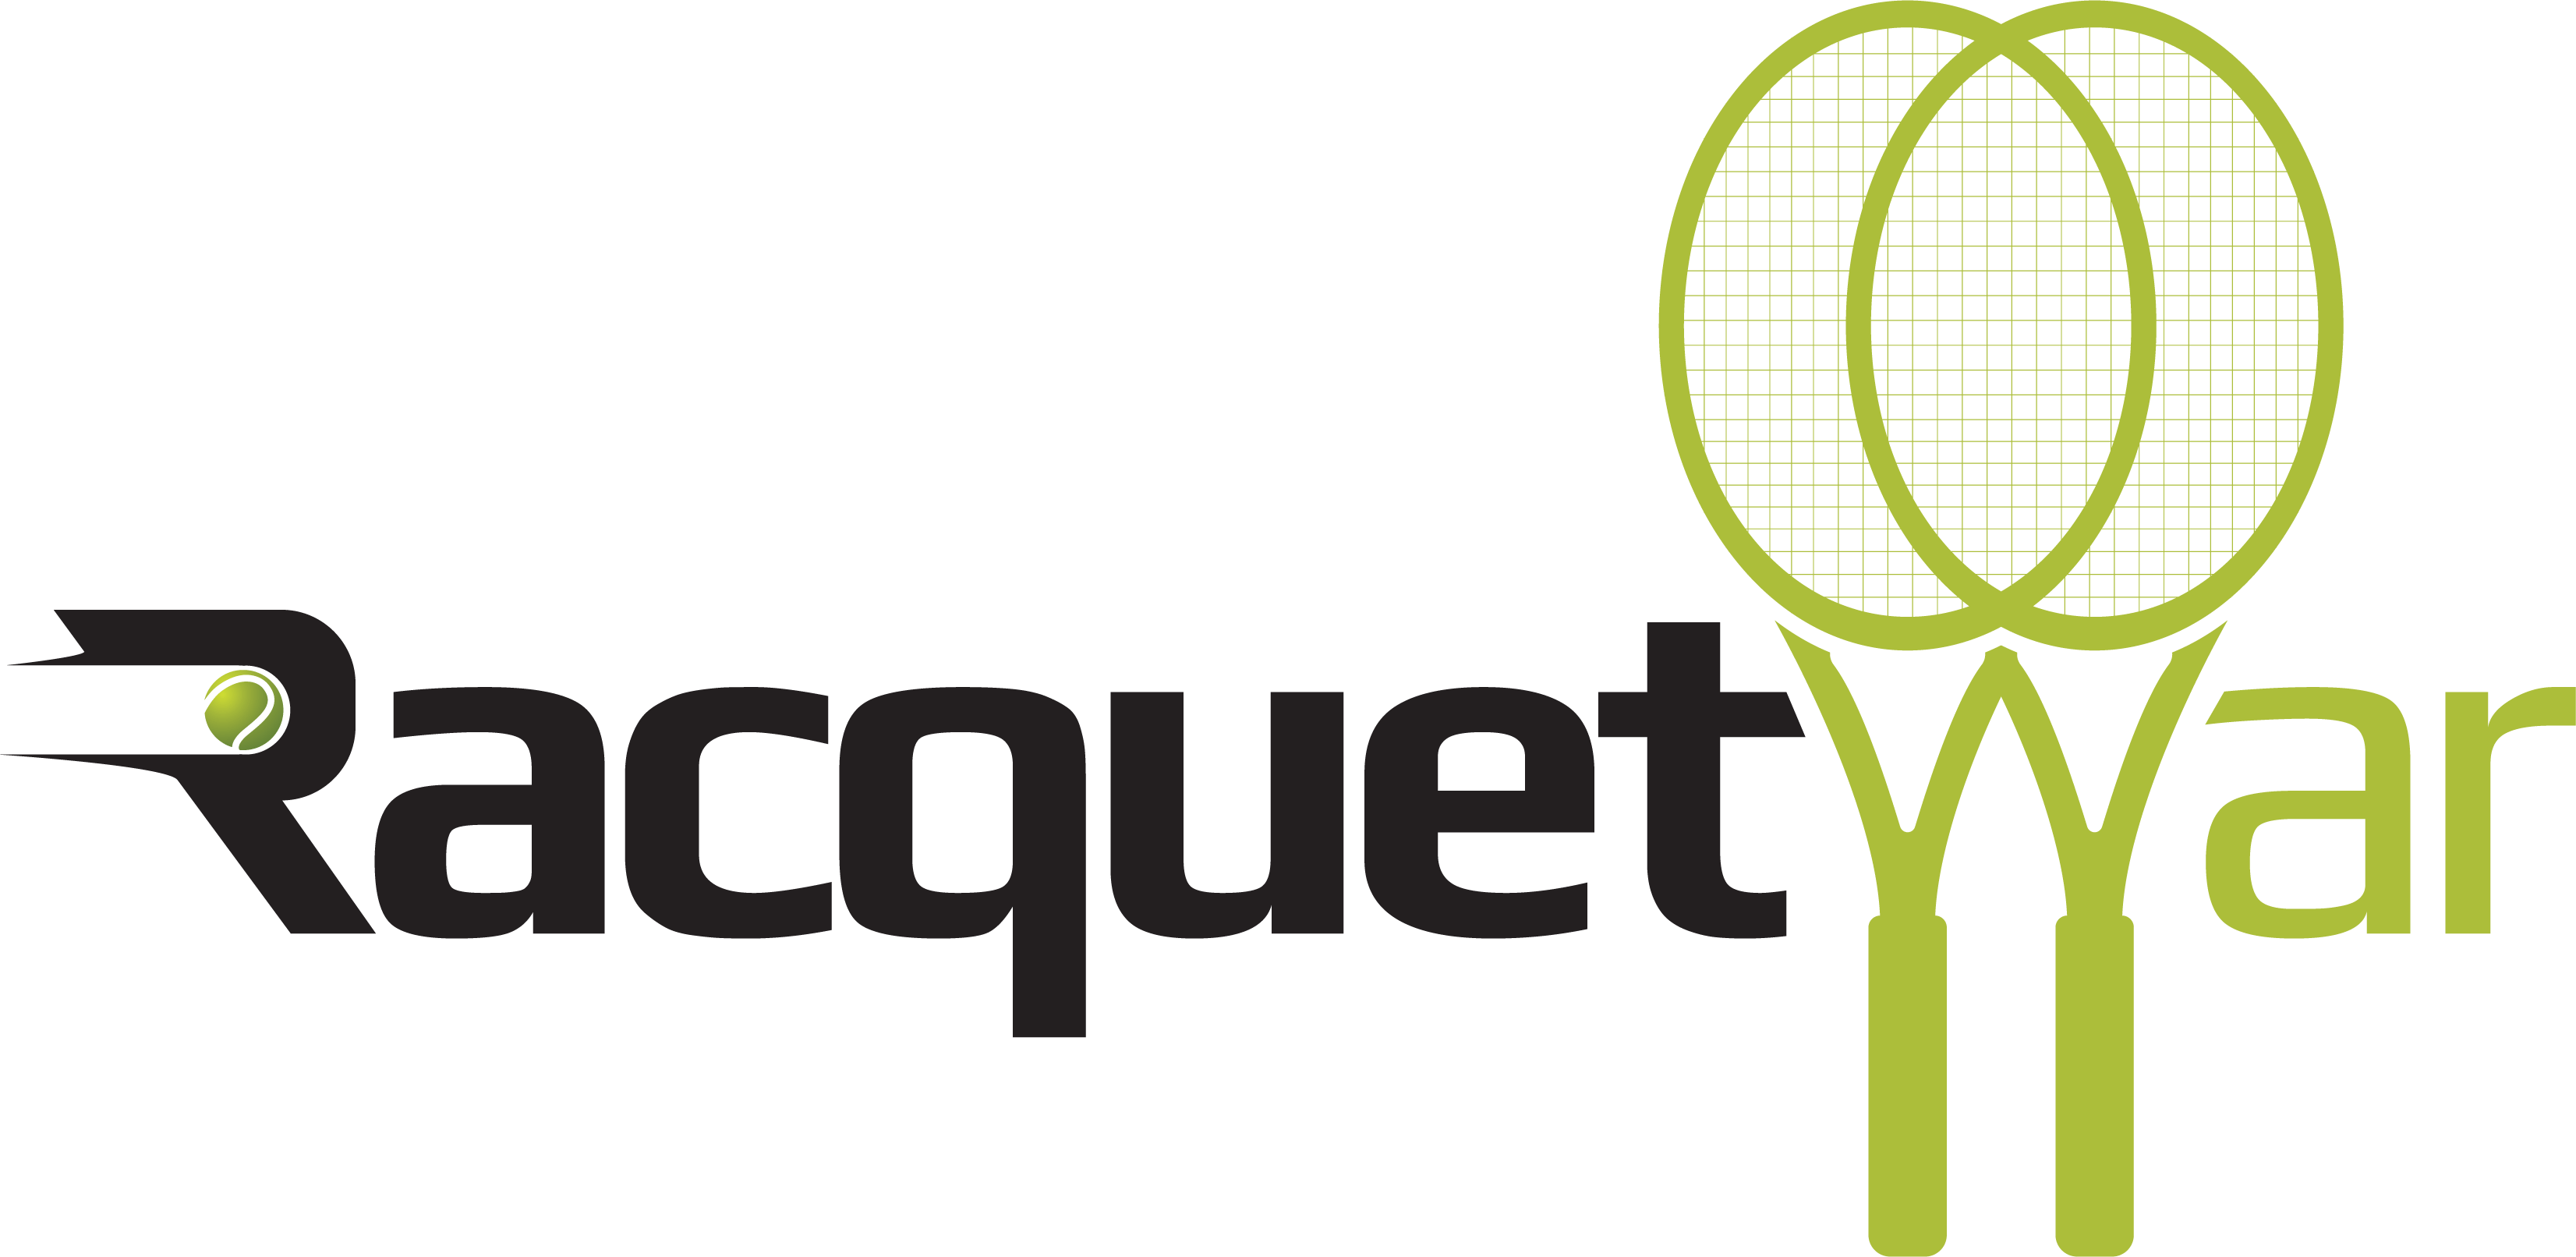 Tennis Racket Logo - Racquet War - Offering Competitive Tennis Tournaments for Adults